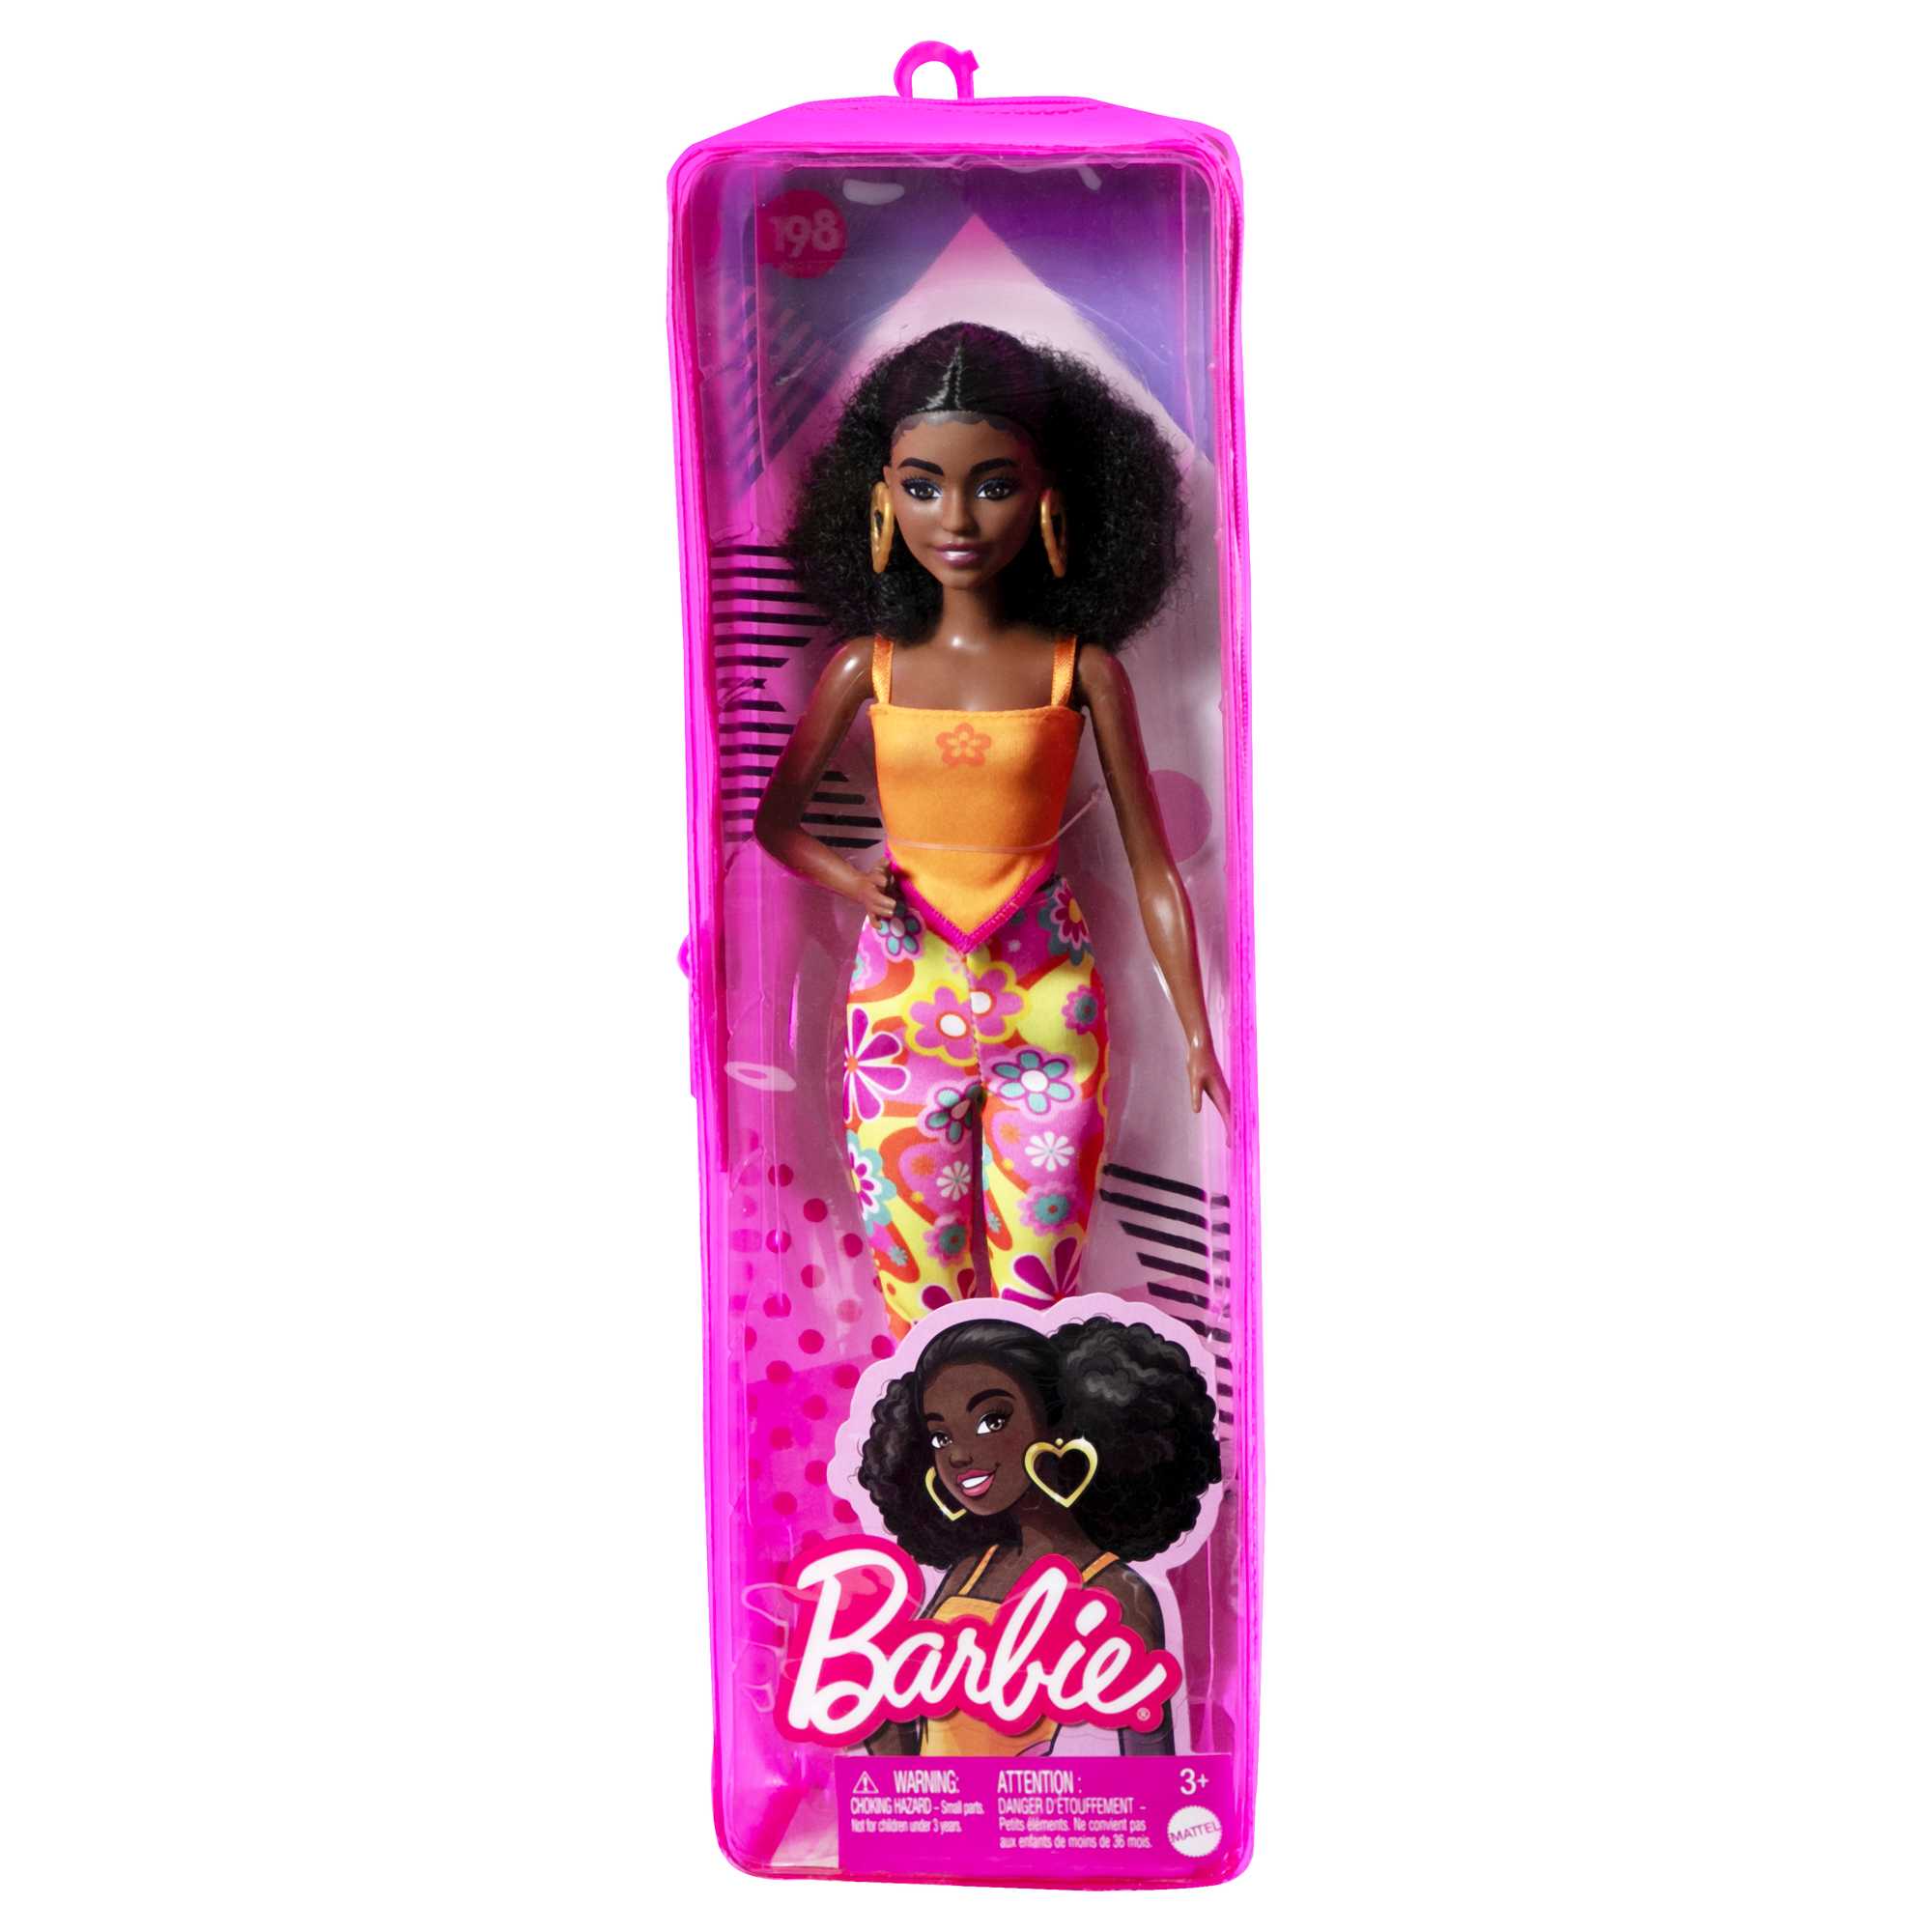 Barbie Doll Assortment, FBR37